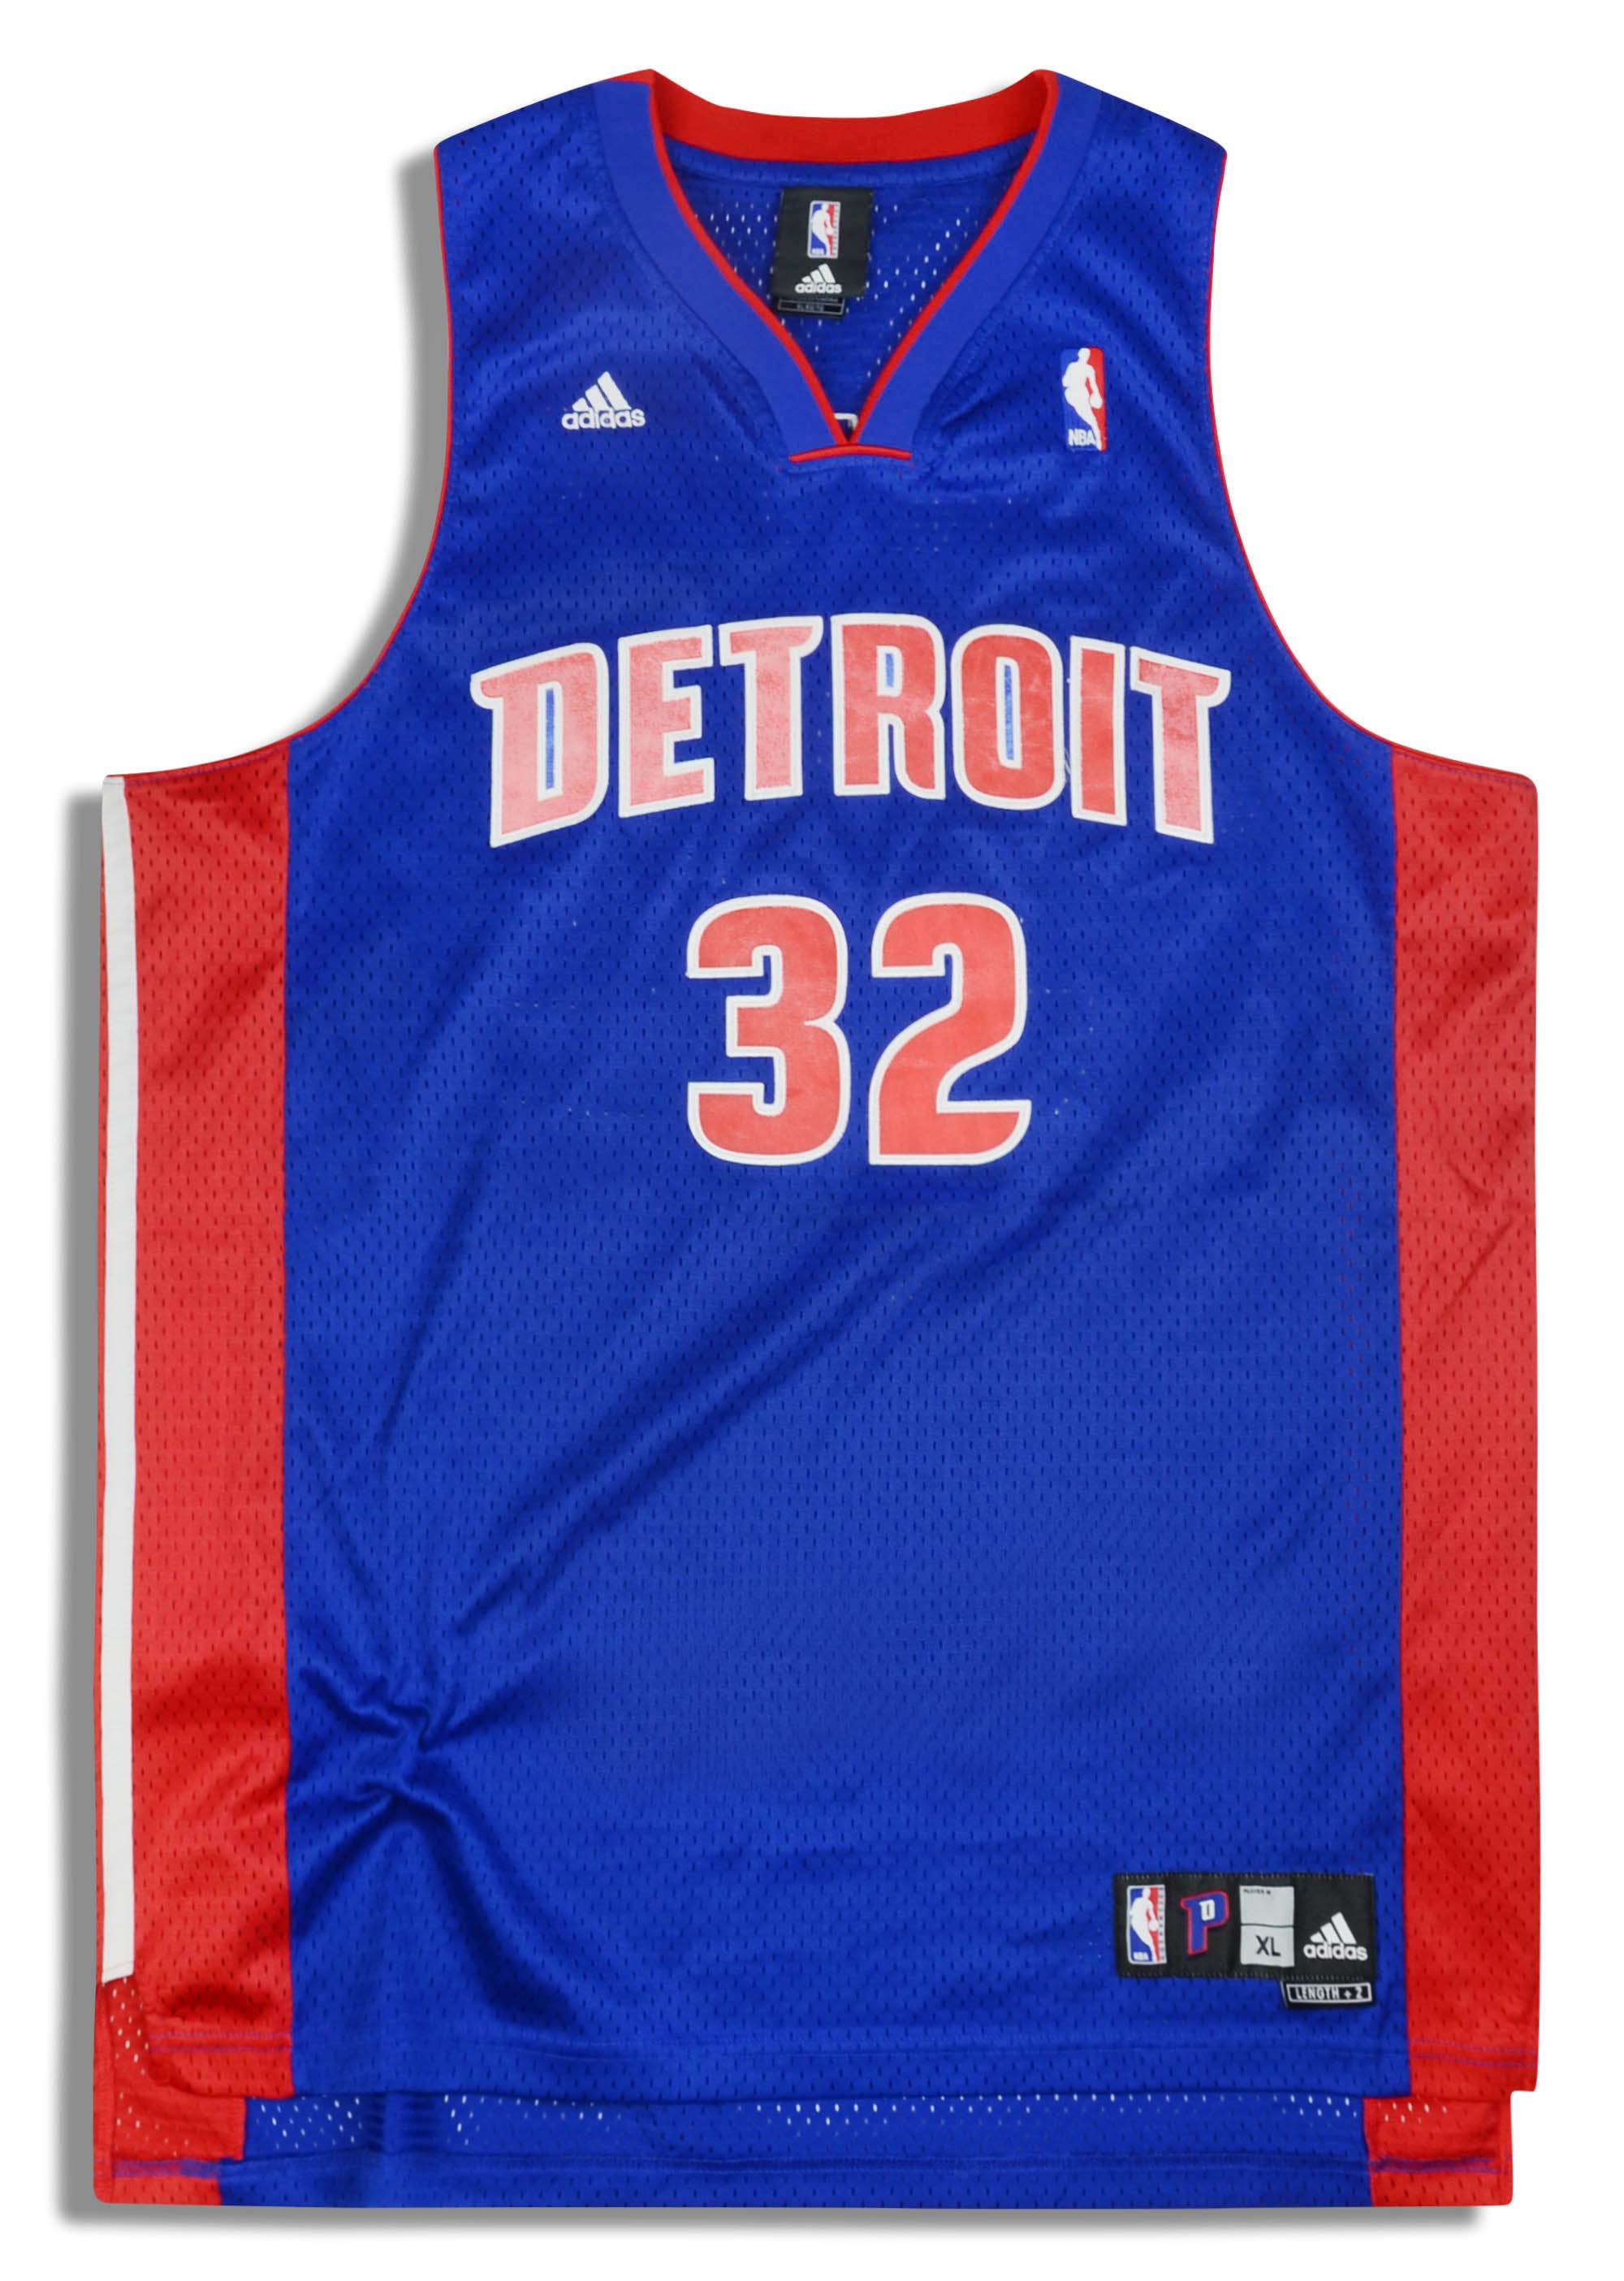 Detroit Pistons to retire Richard Hamilton's jersey next